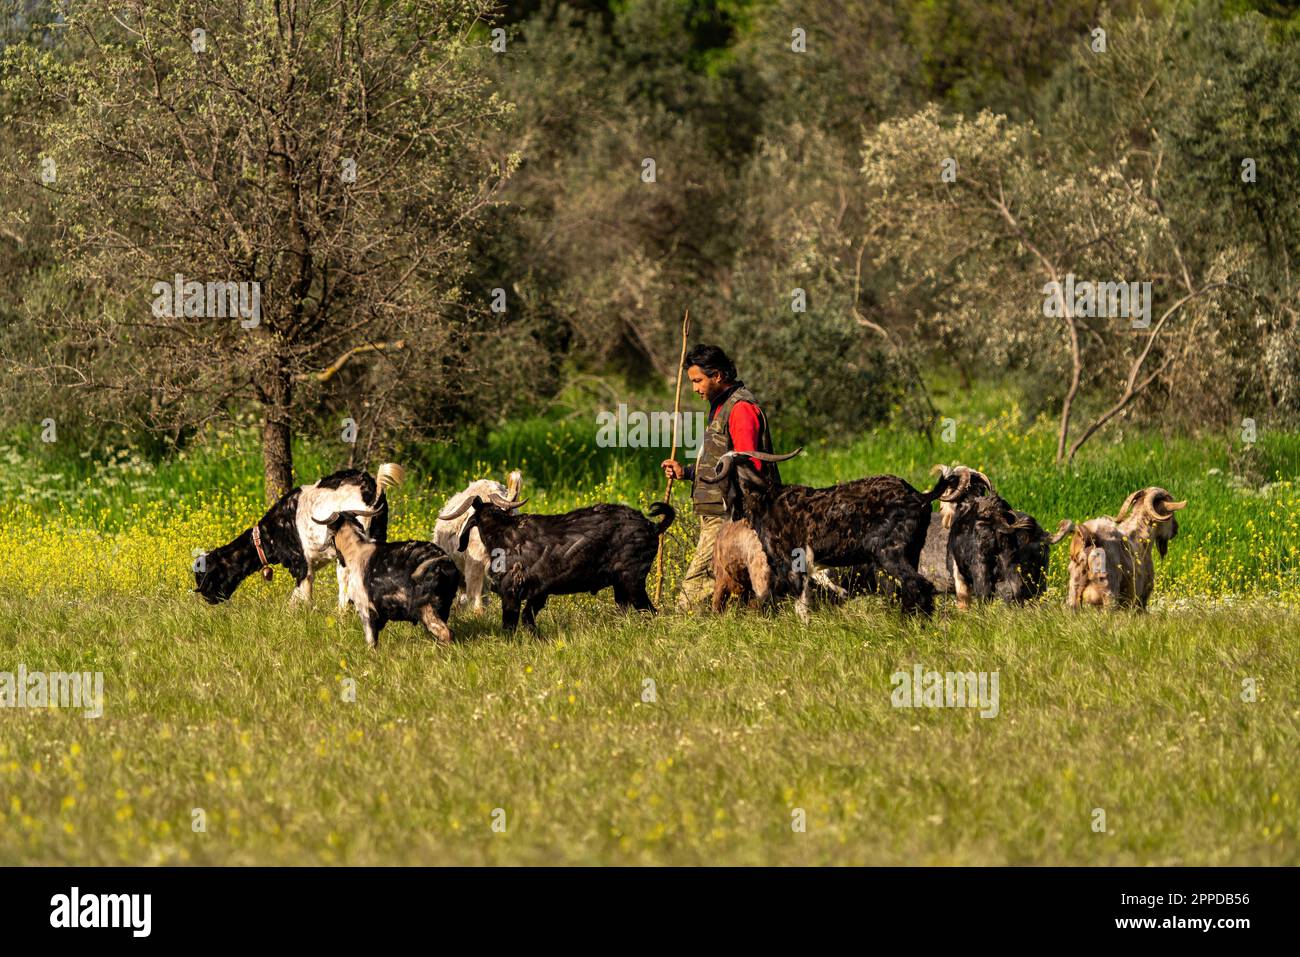 A shepherd grazing a herd of goats Stock Photo